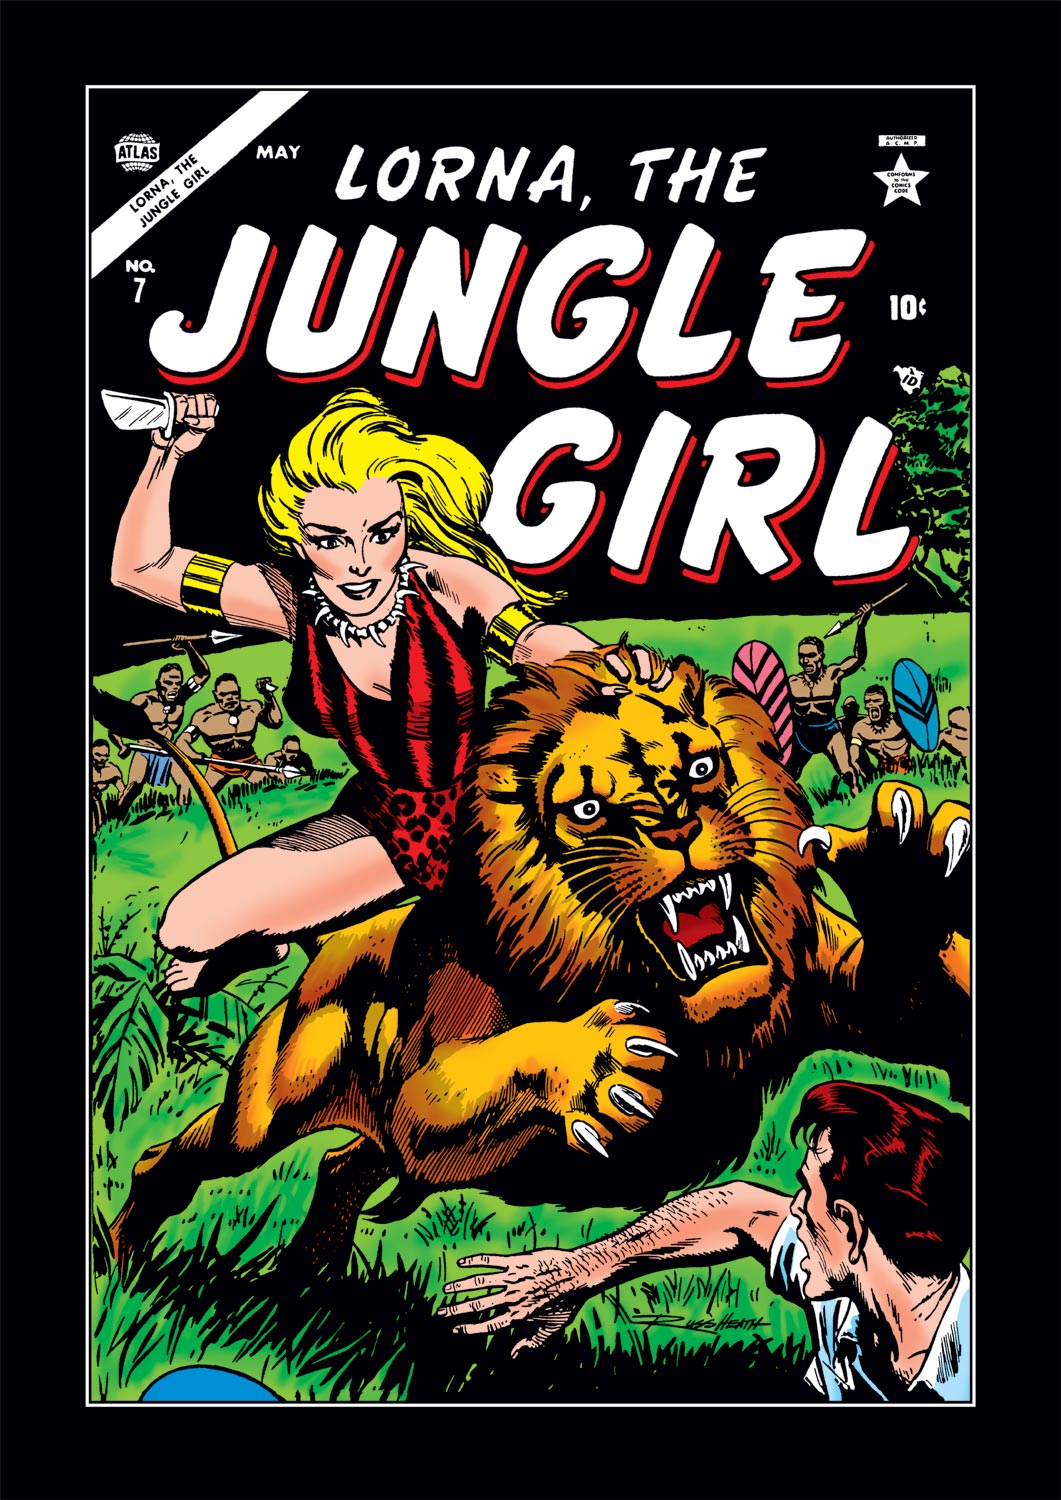 Lorna the Jungle Girl (1954) #7